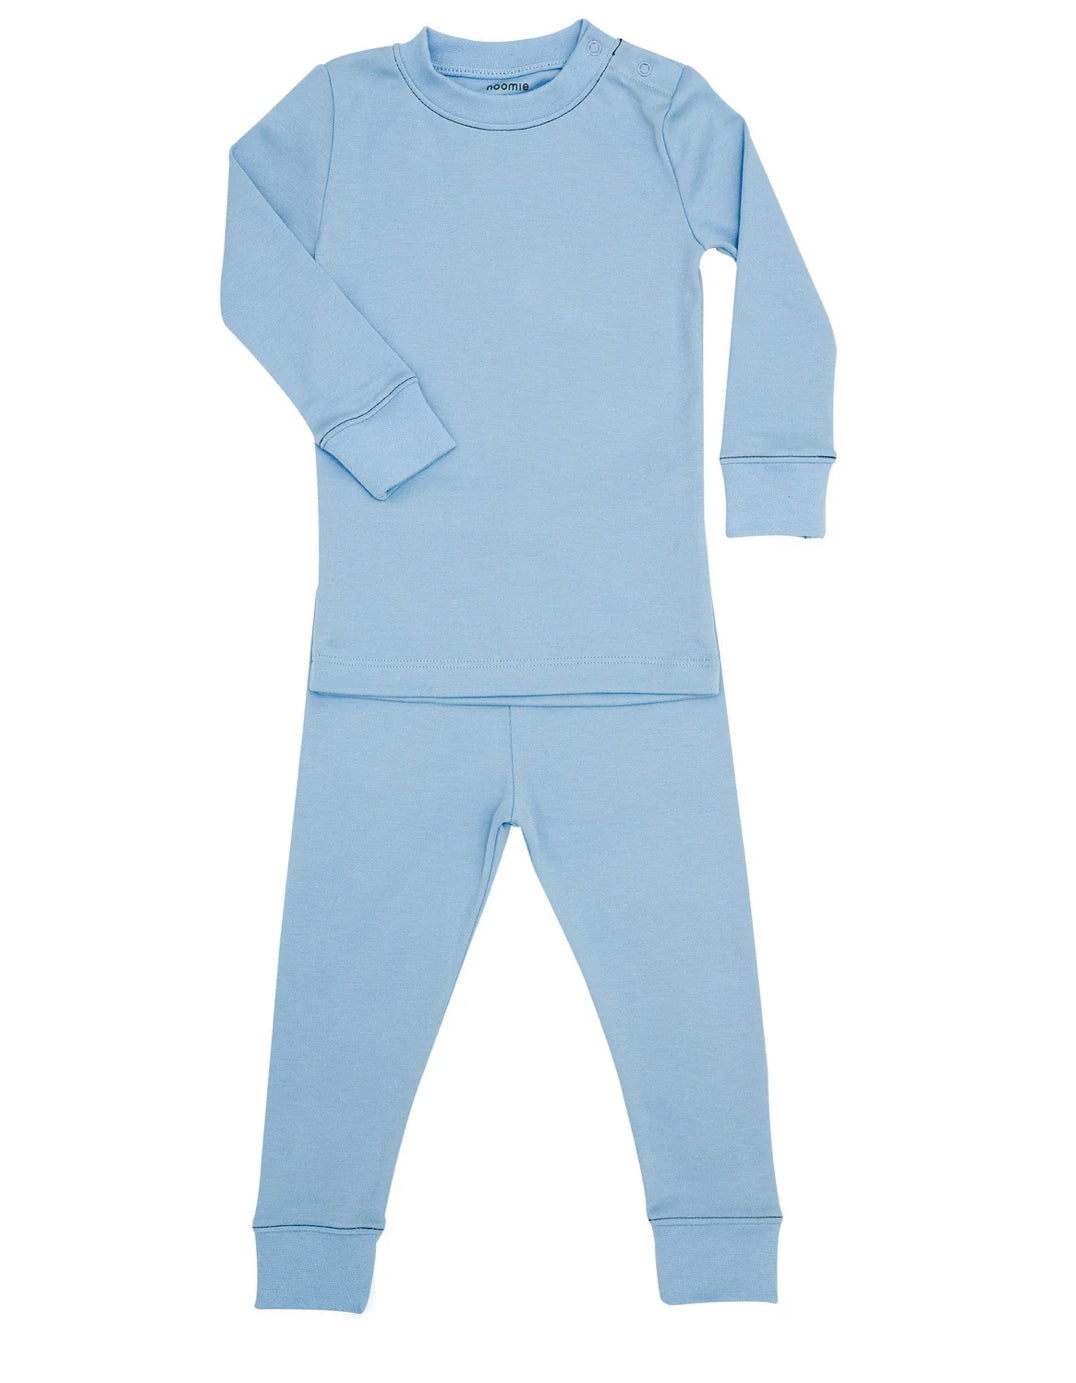 Noomie Boys Solid Blue Pajamas Shirt Set